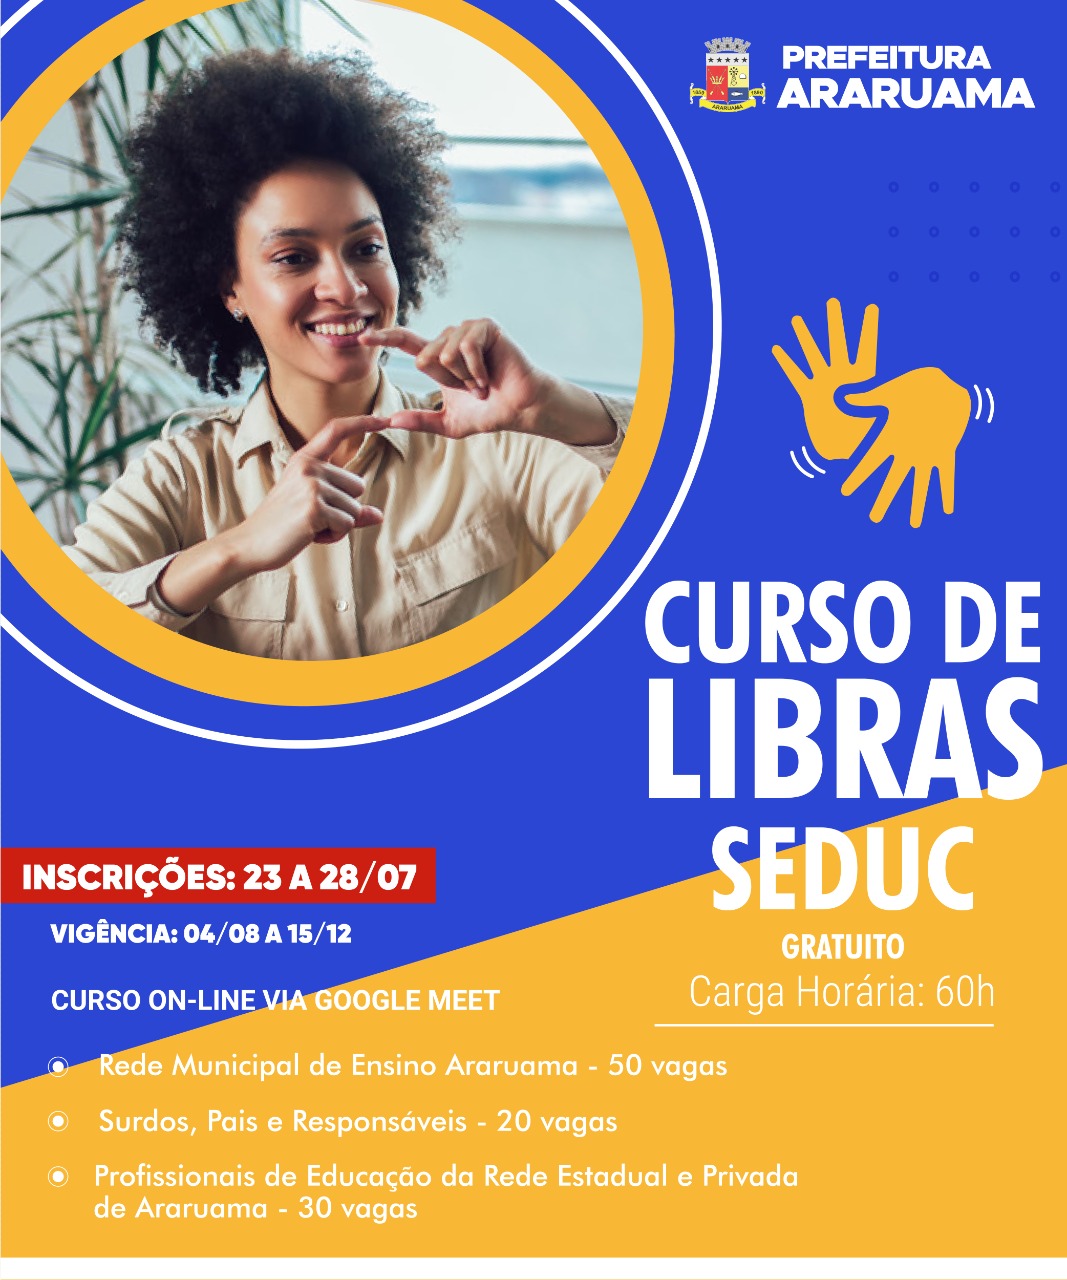 Prefeitura de Araruama abre inscrições para curso gratuito de Libras (Língua Brasileira de Sinais)